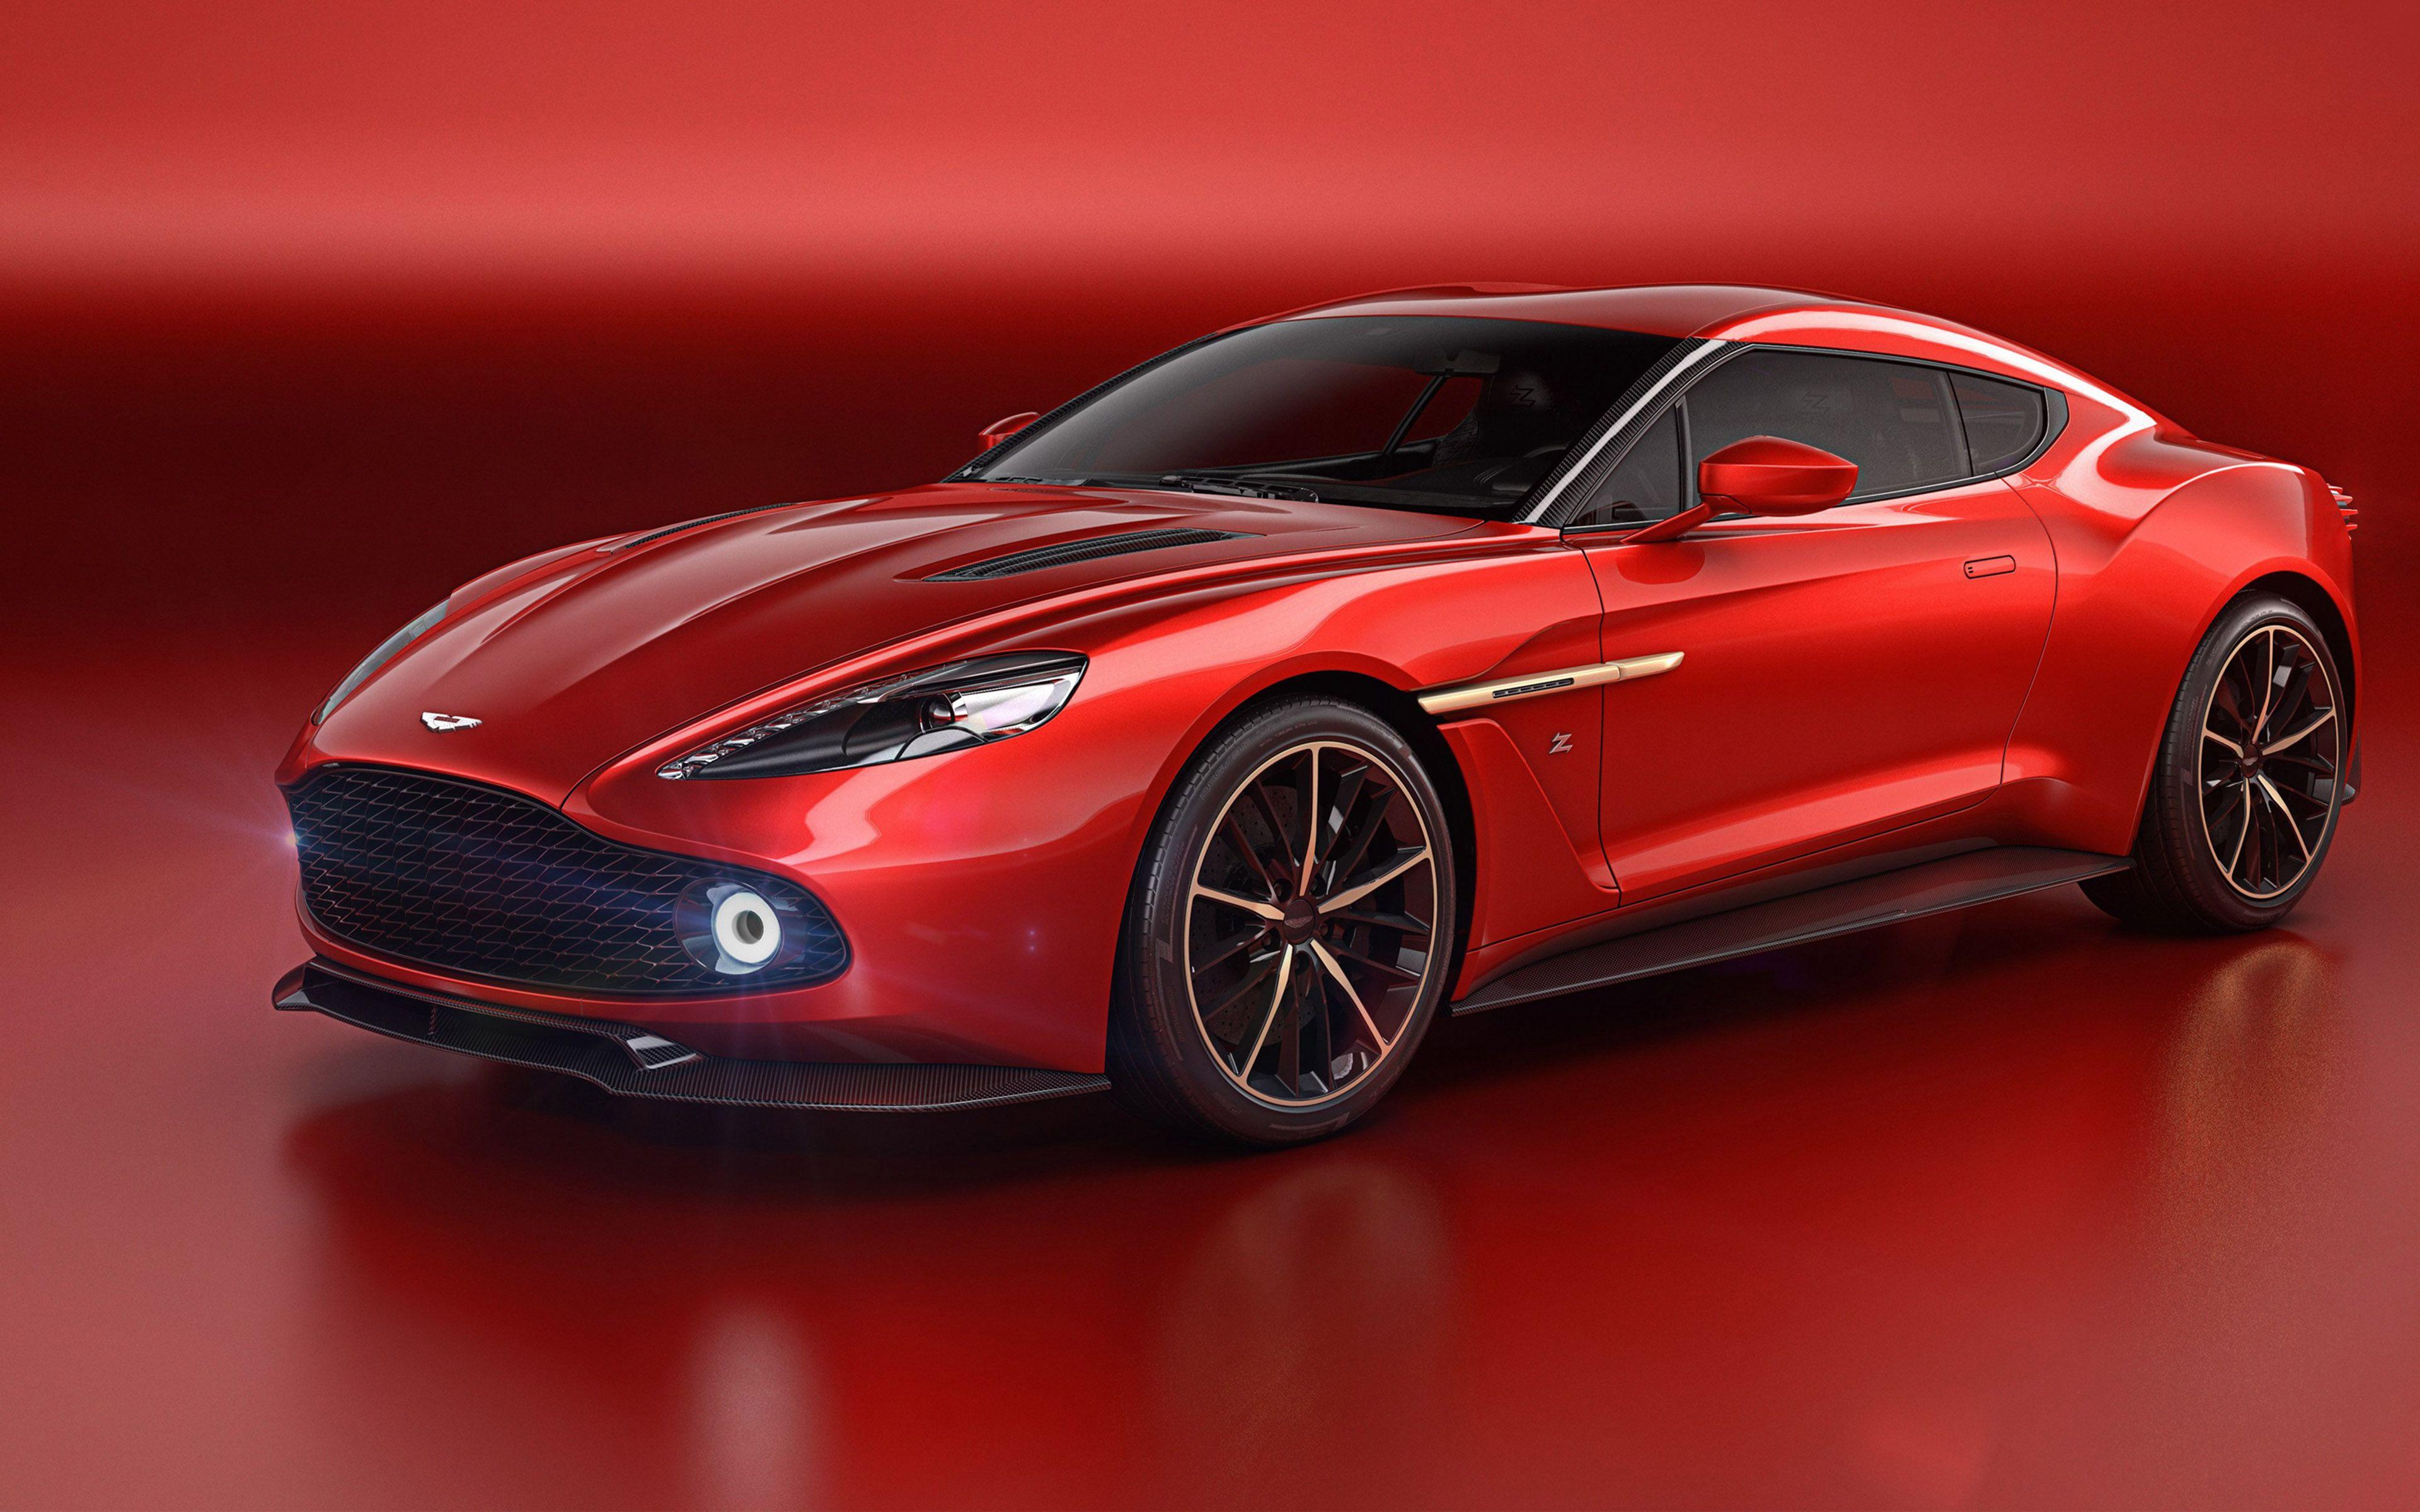 Aston Martin Vanquish Zagato Red Car Wallpaper